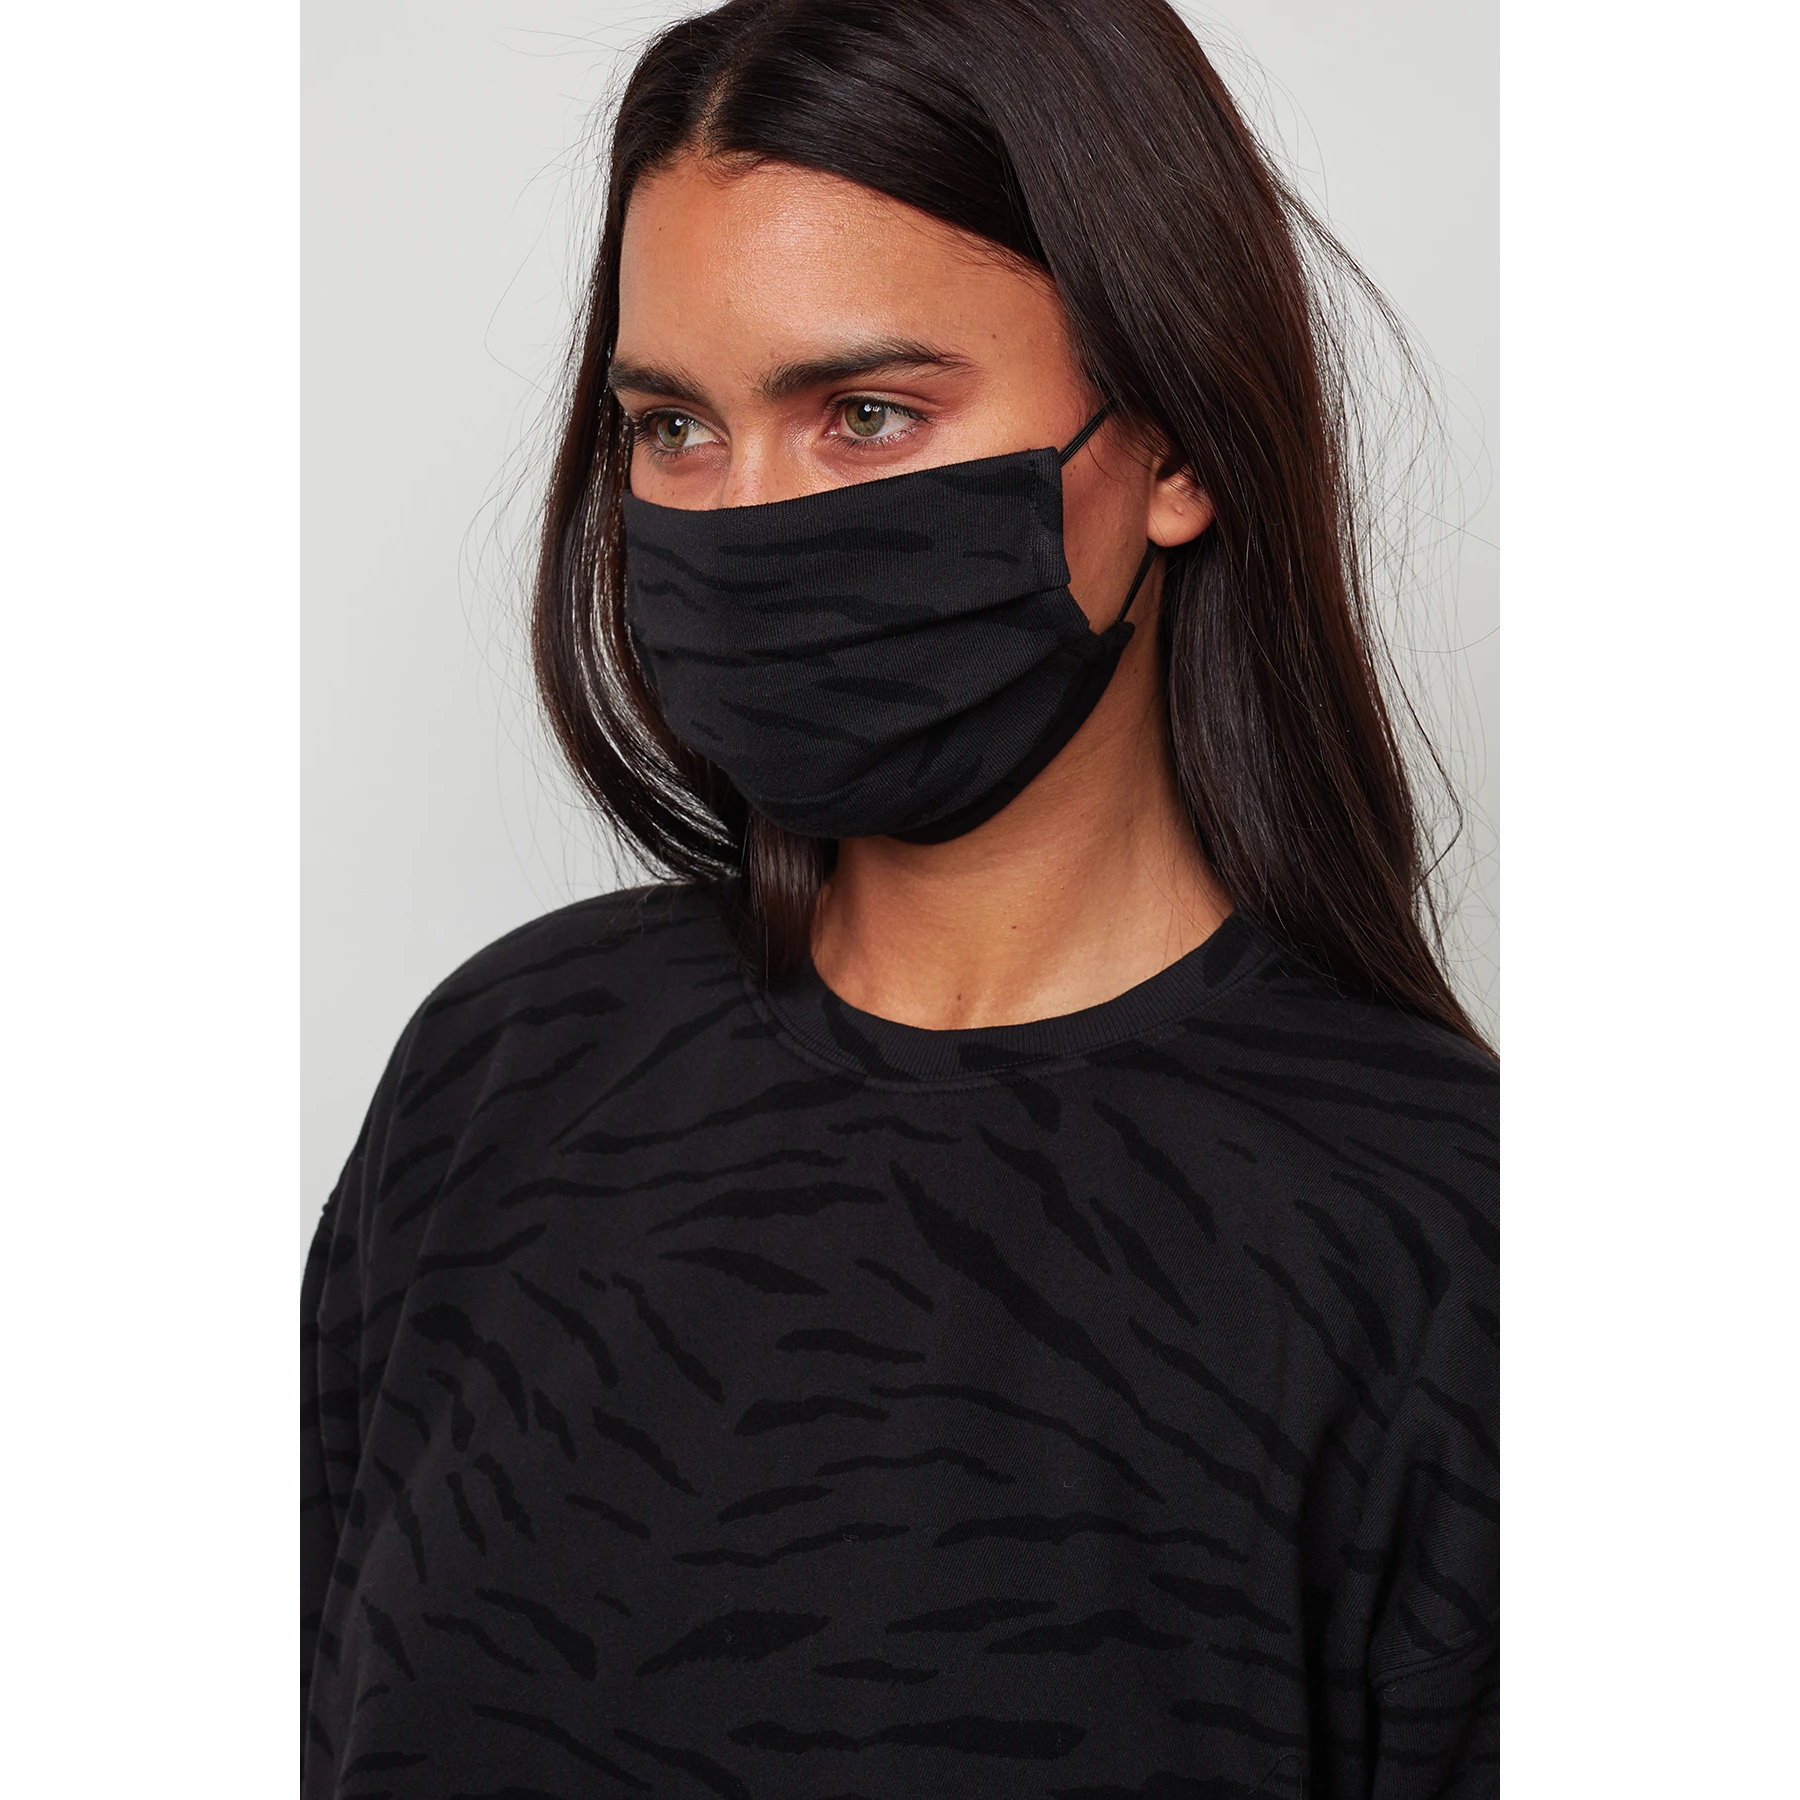 Viena Zebra Exhaust Print Face Mask